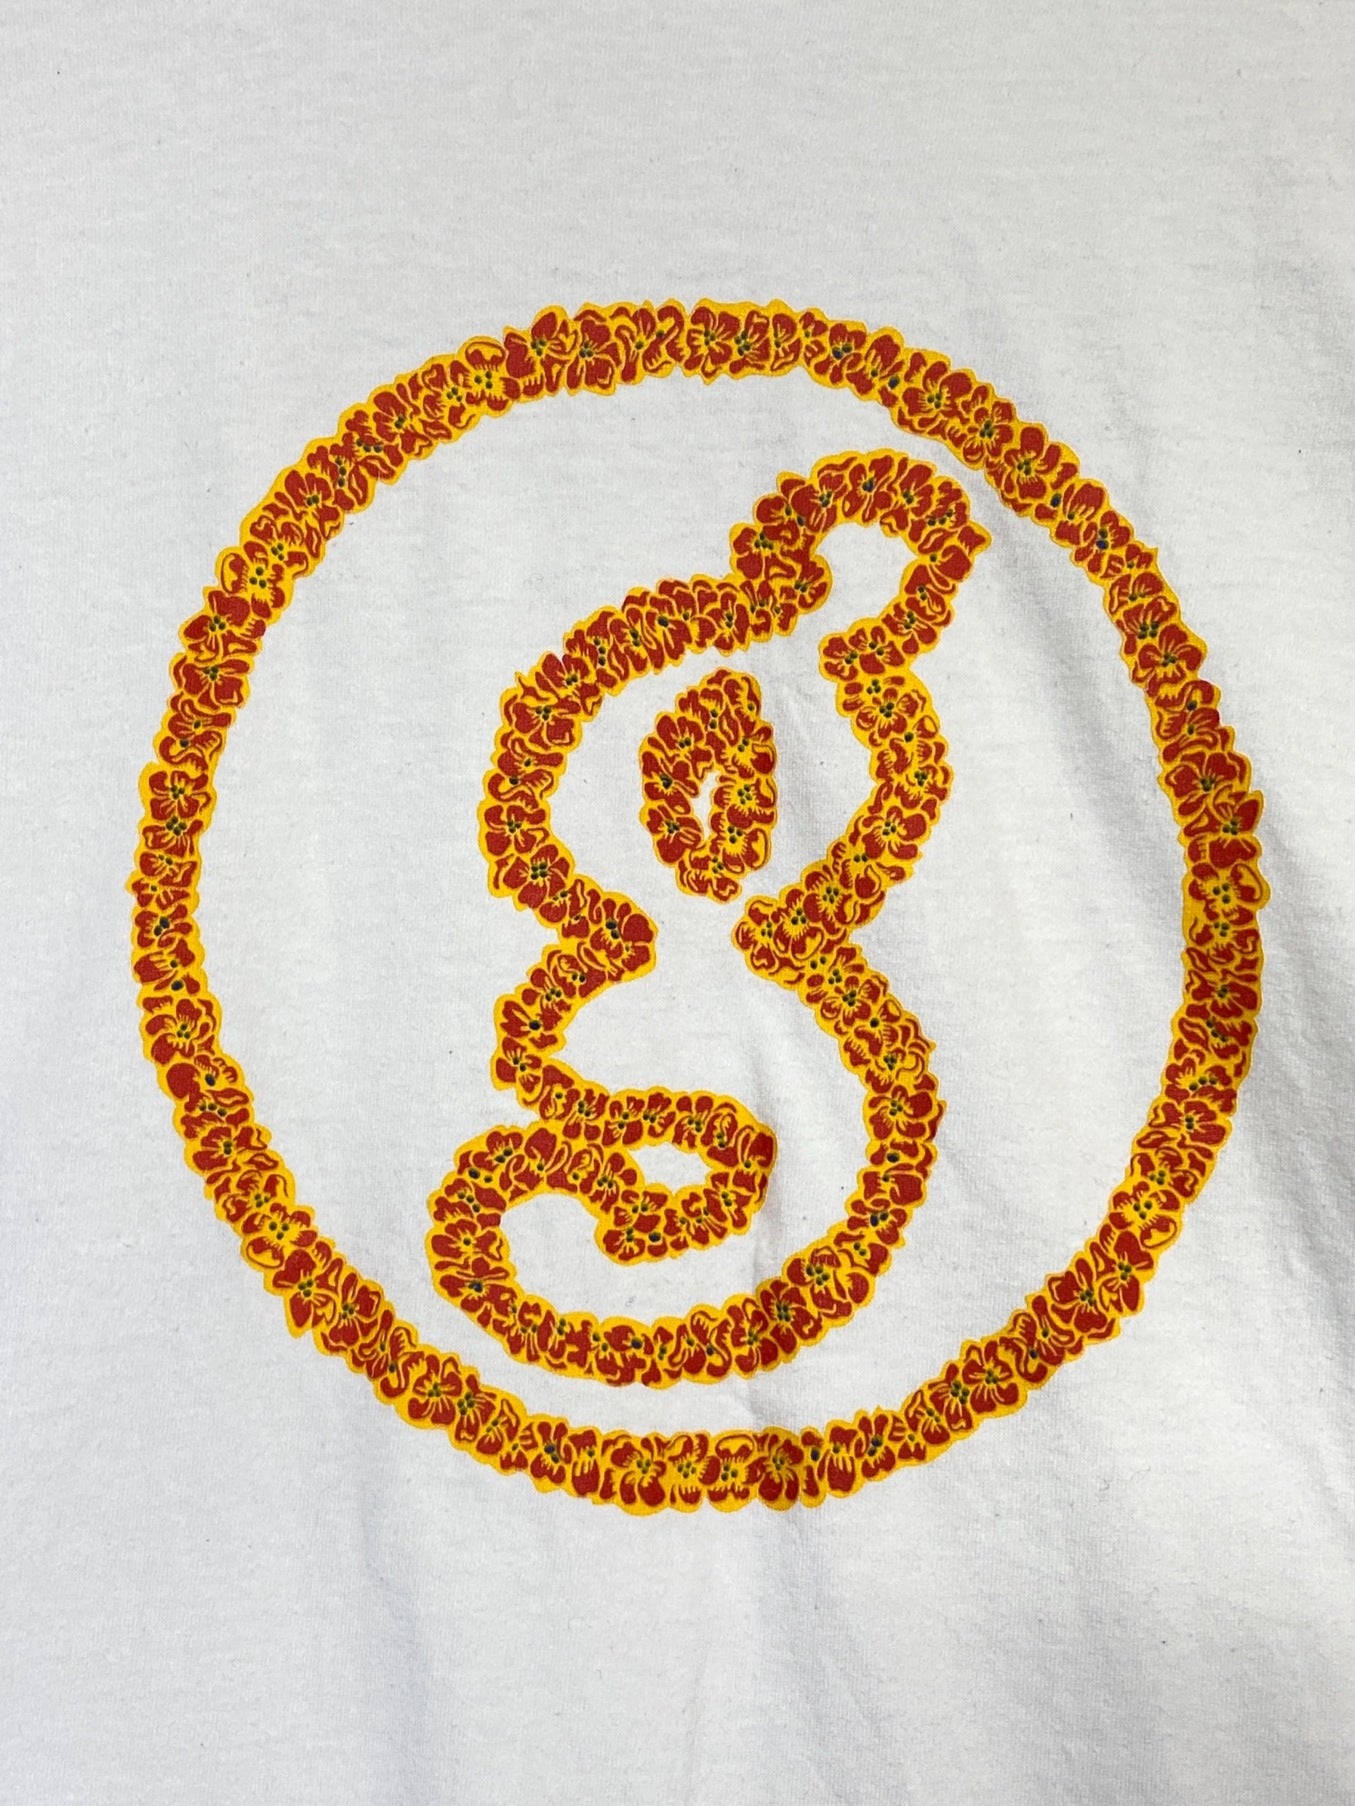 [Pre-owned] GOOD ENOUGH Circle Logo Print T-Shirt